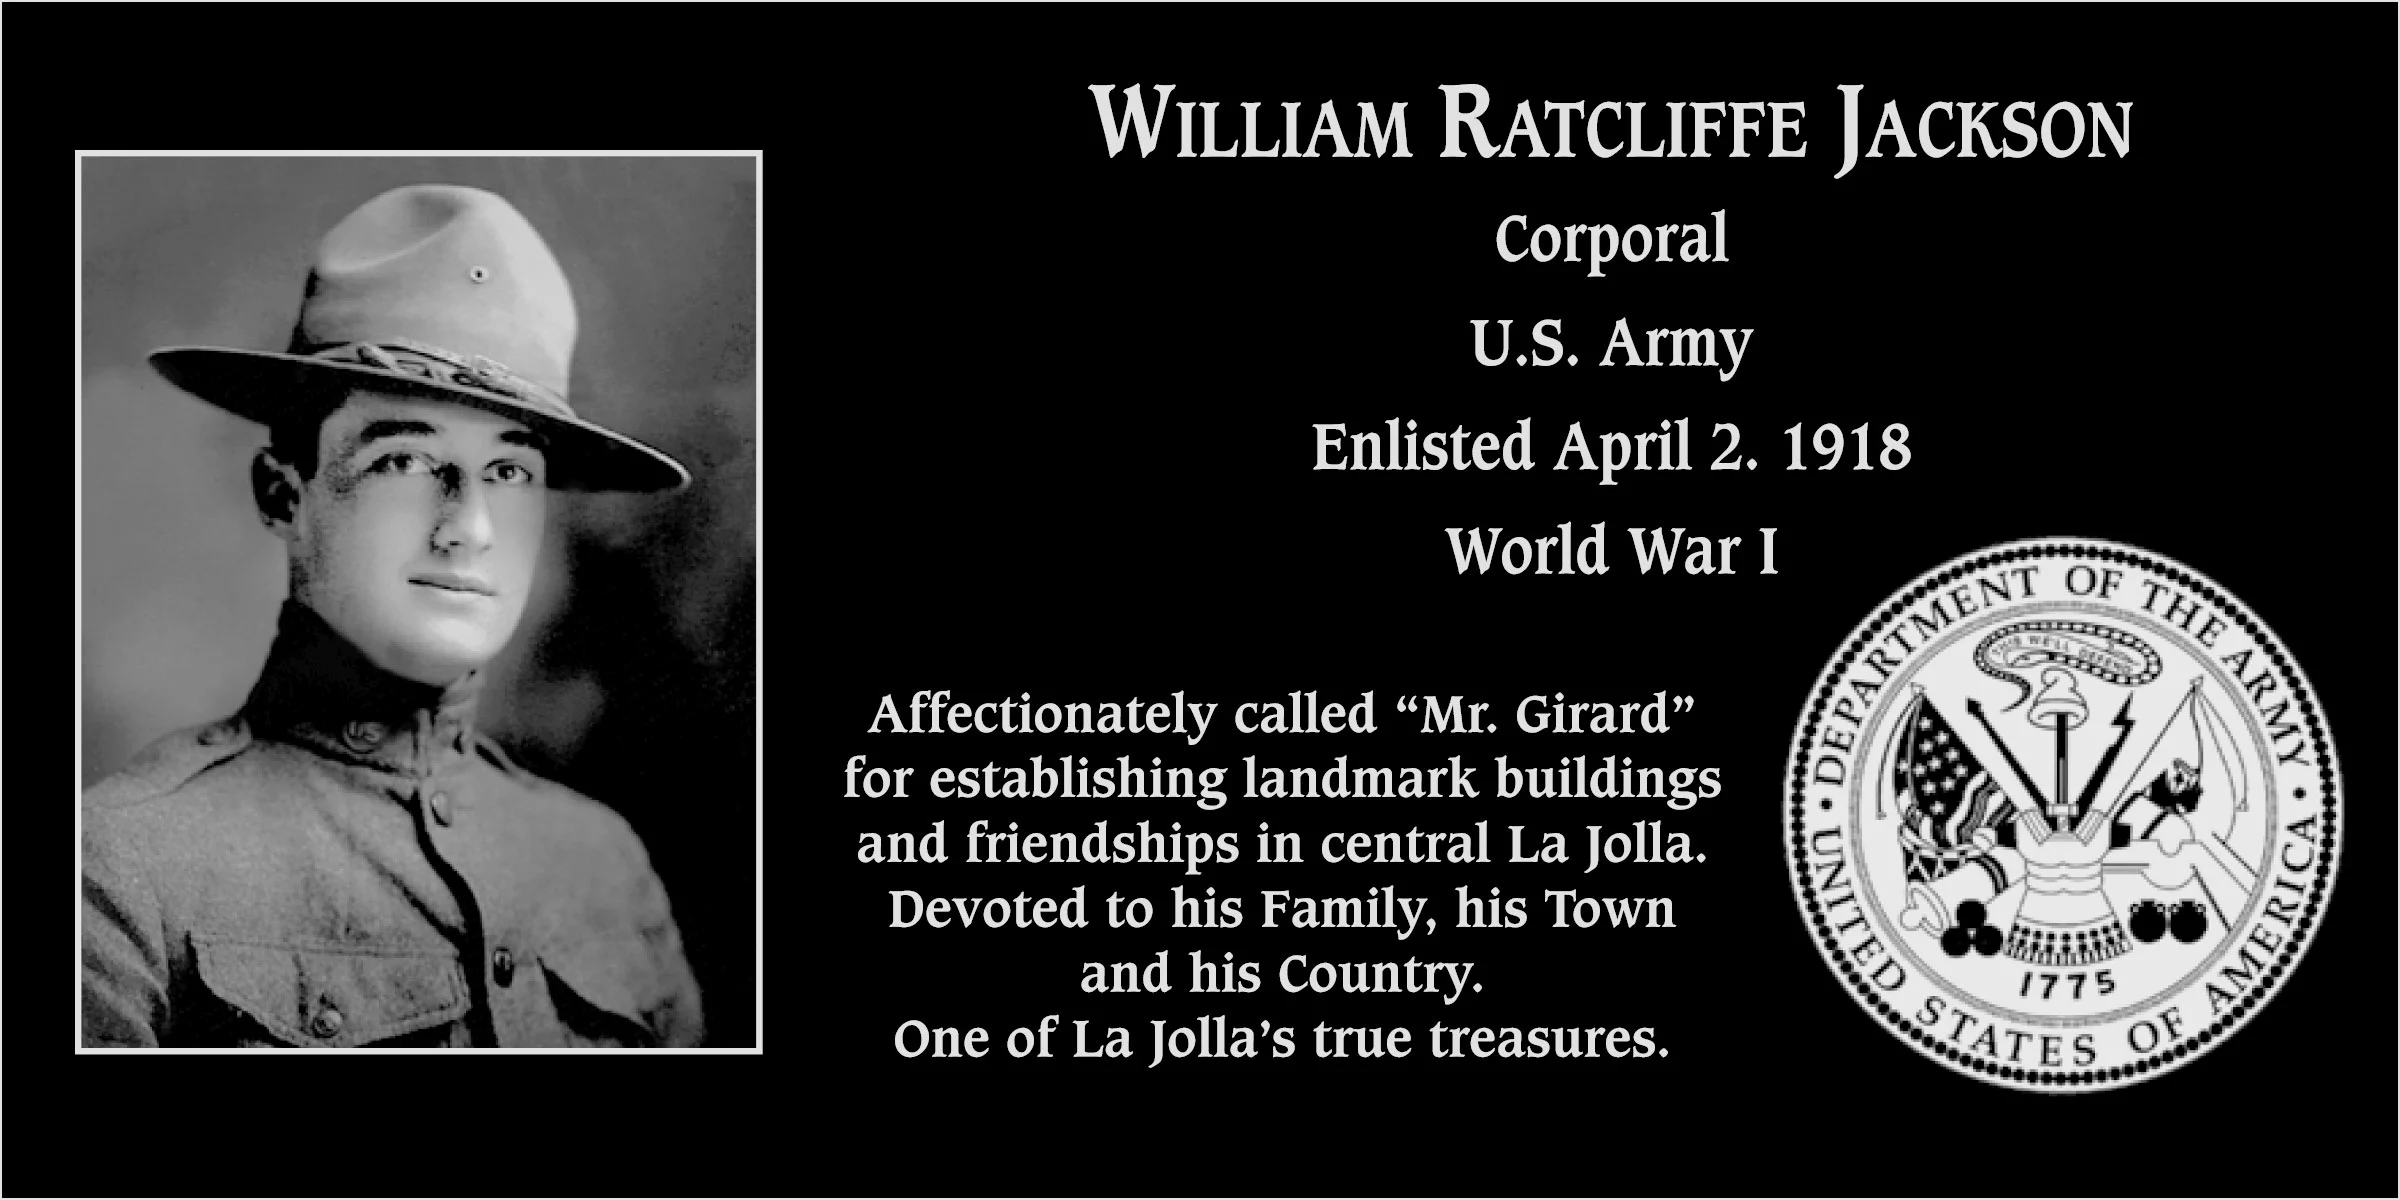 William Ratcliffe Jackson